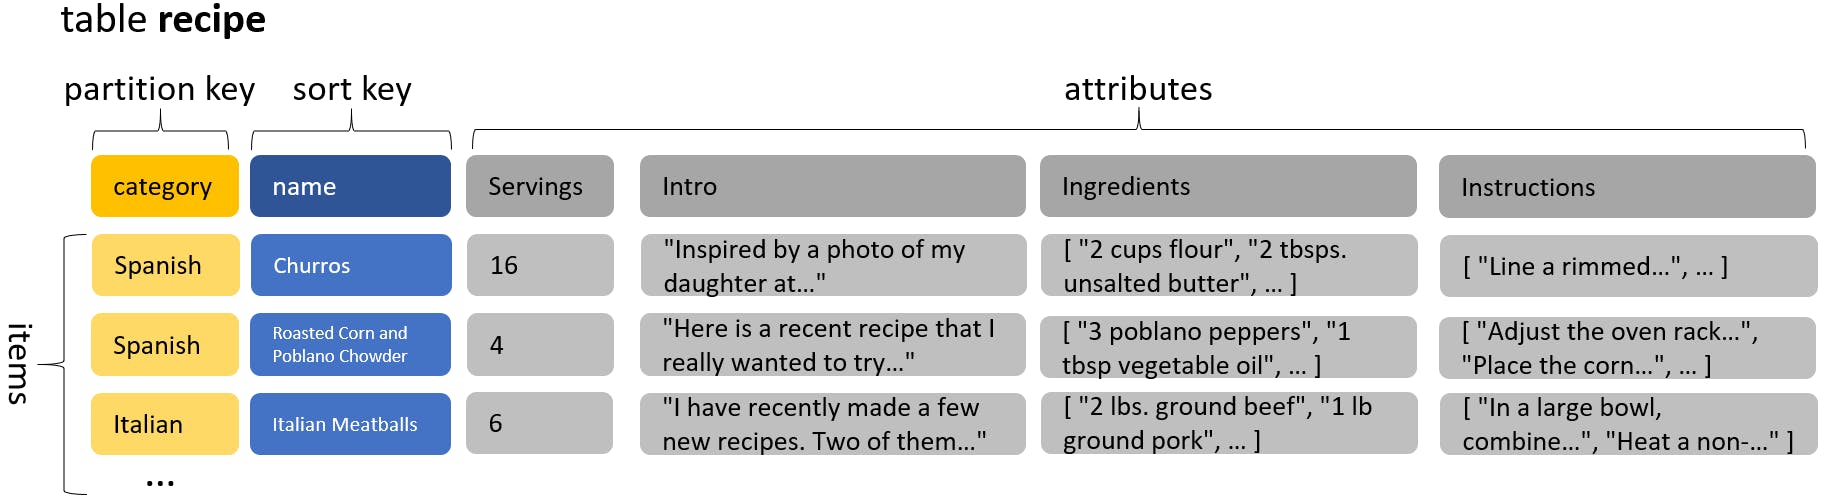 diagram-table-recipe.png